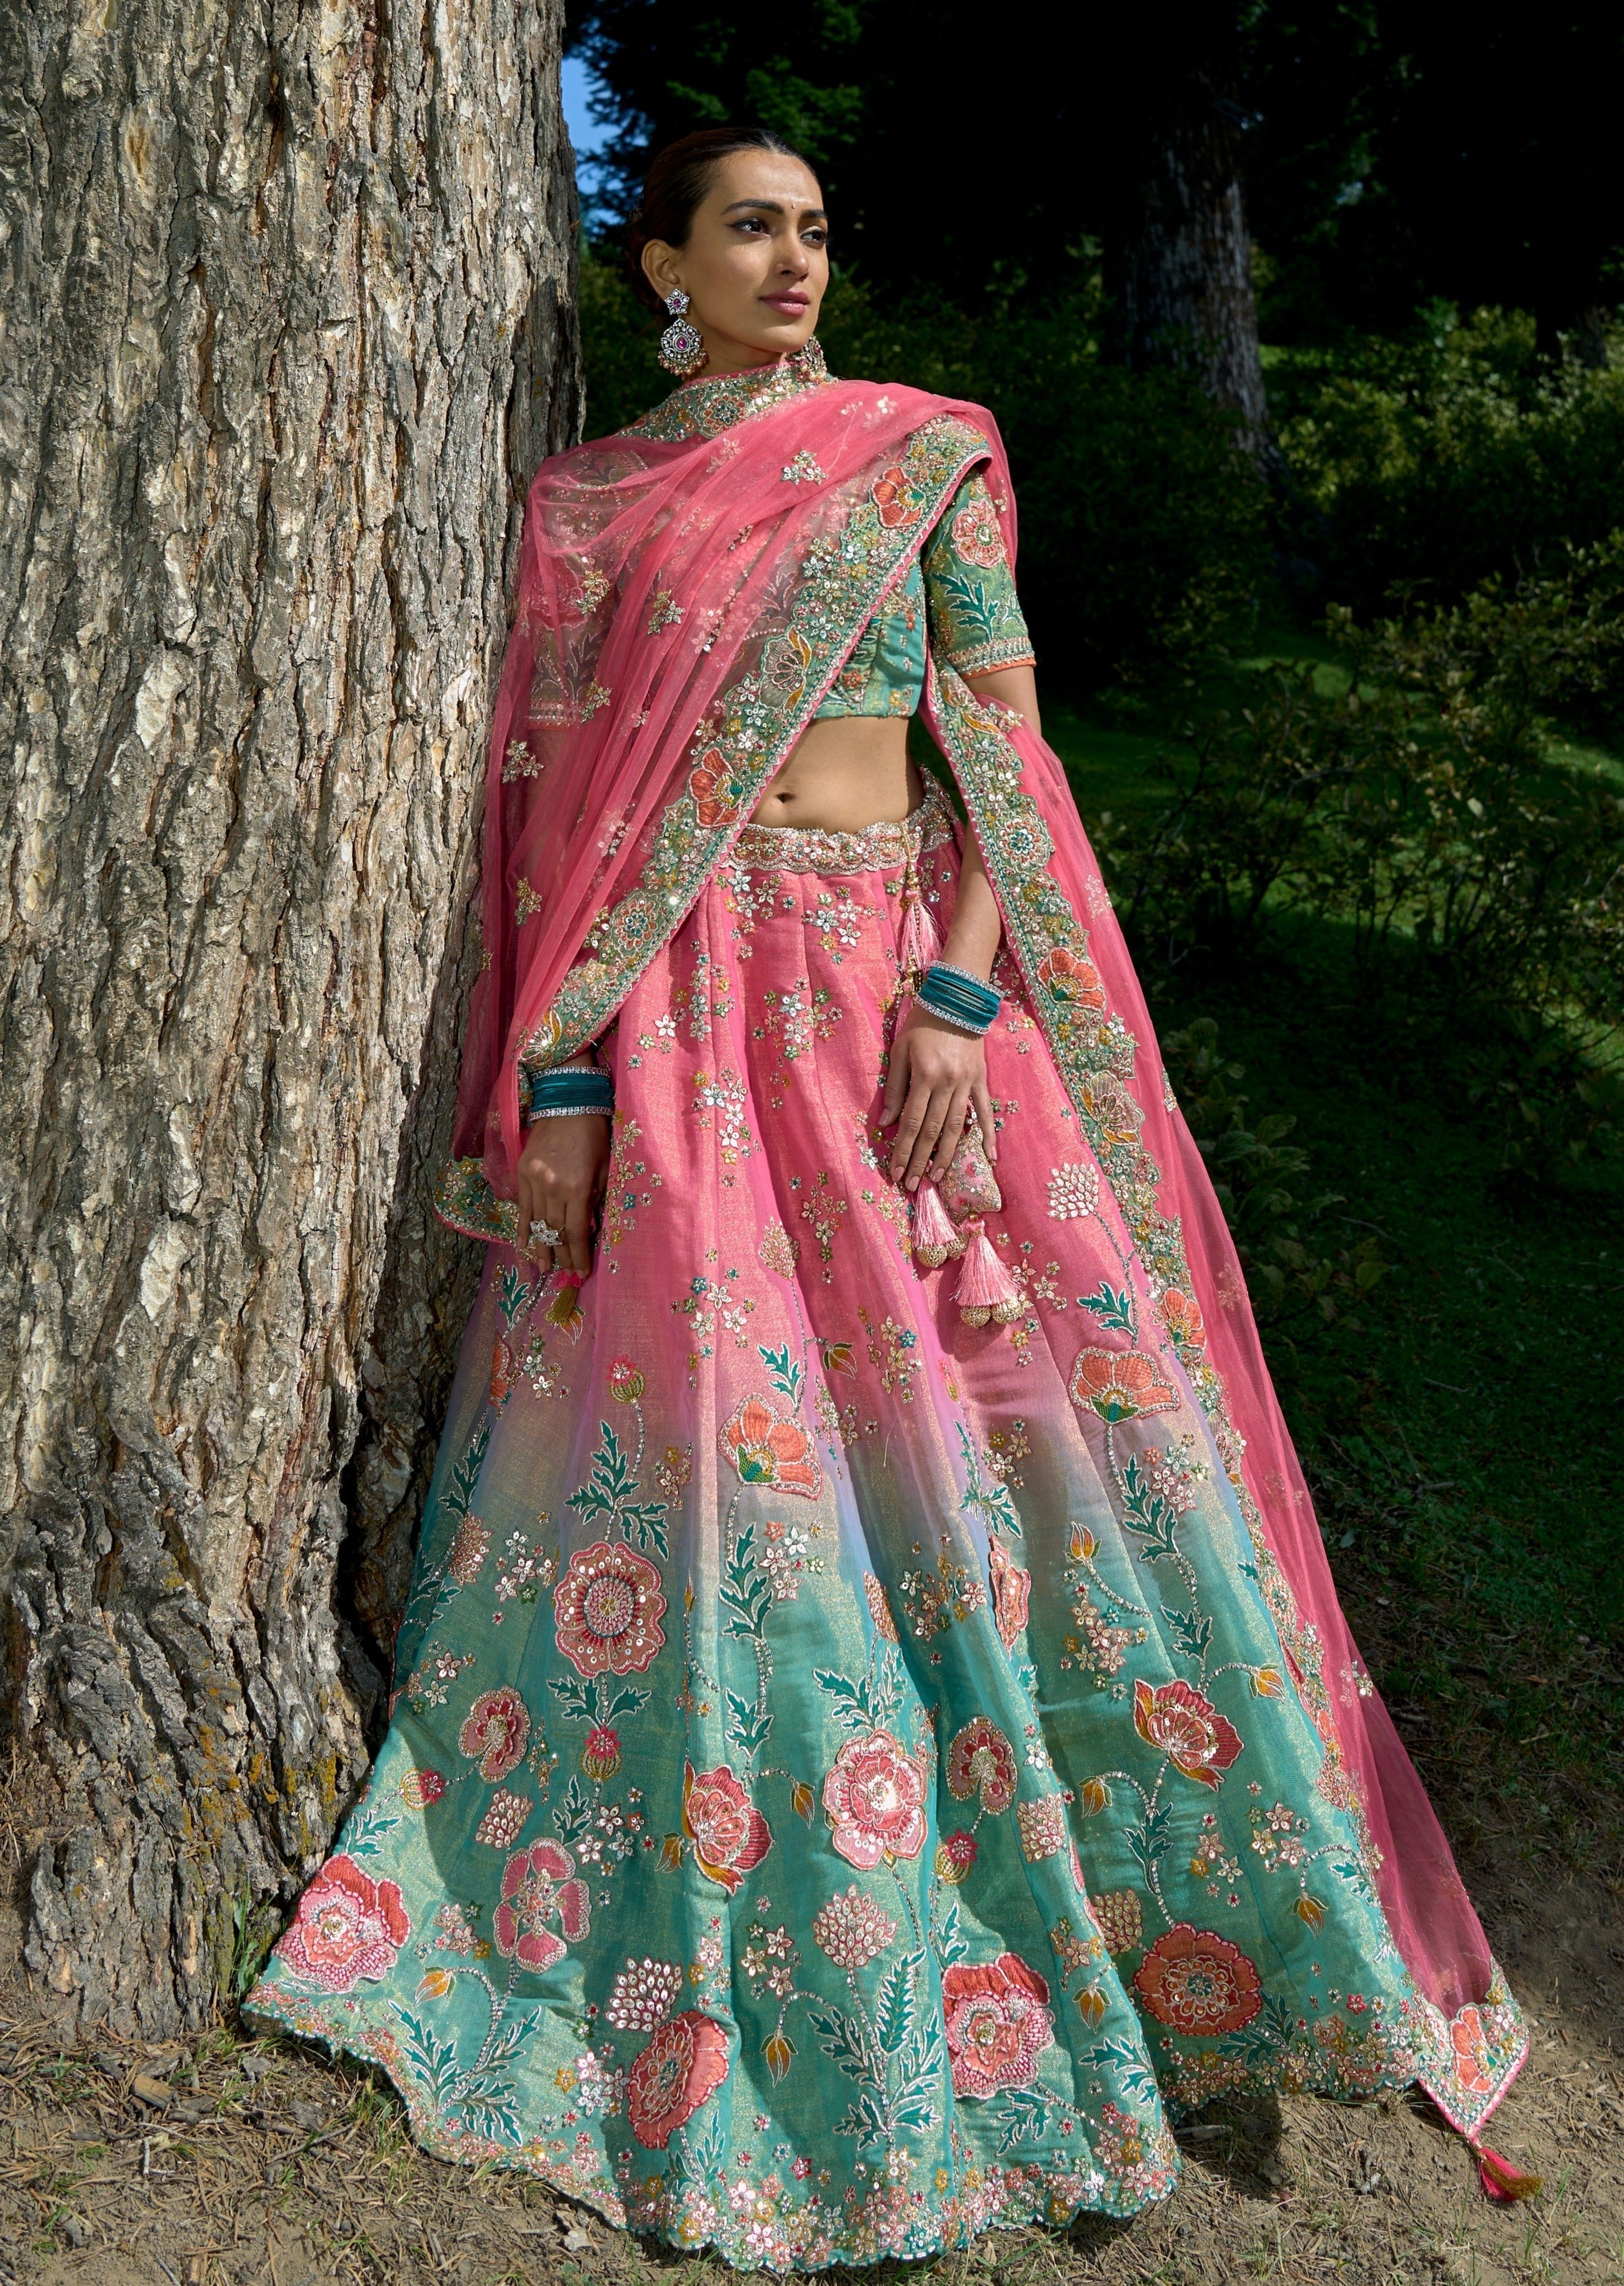 INDIAN WEDDING LEHENGA - Dress Come True